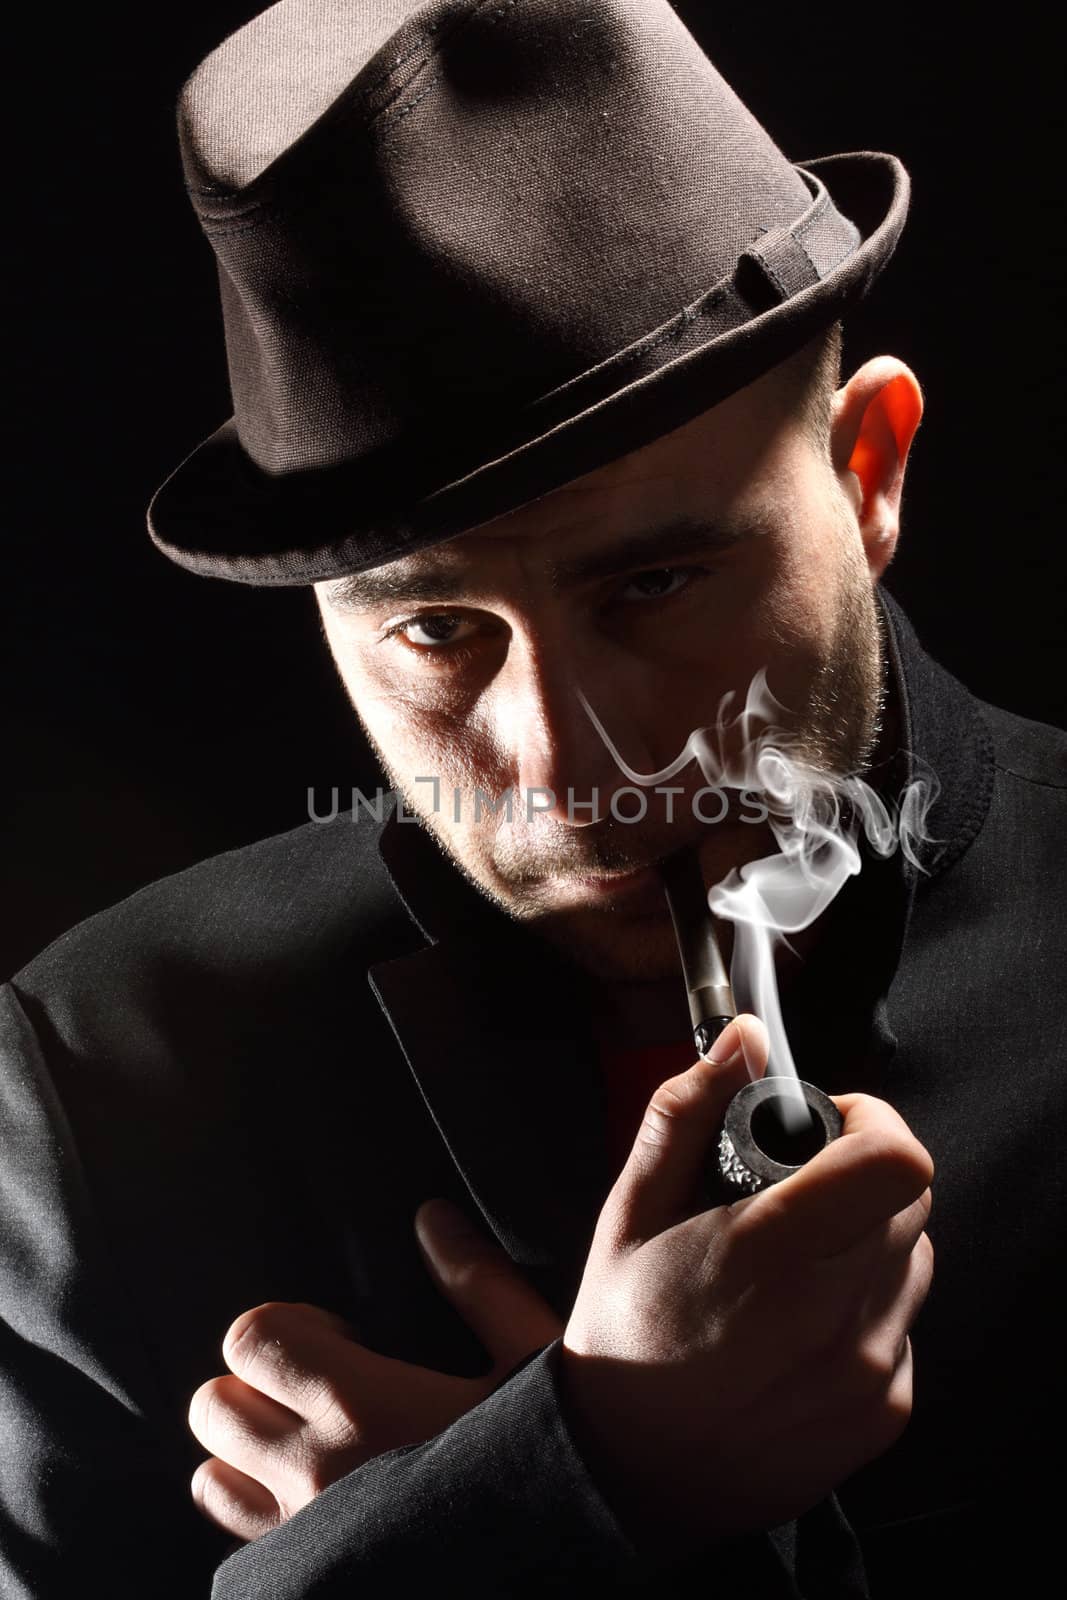  portrait of a pipe smoker by alexkosev